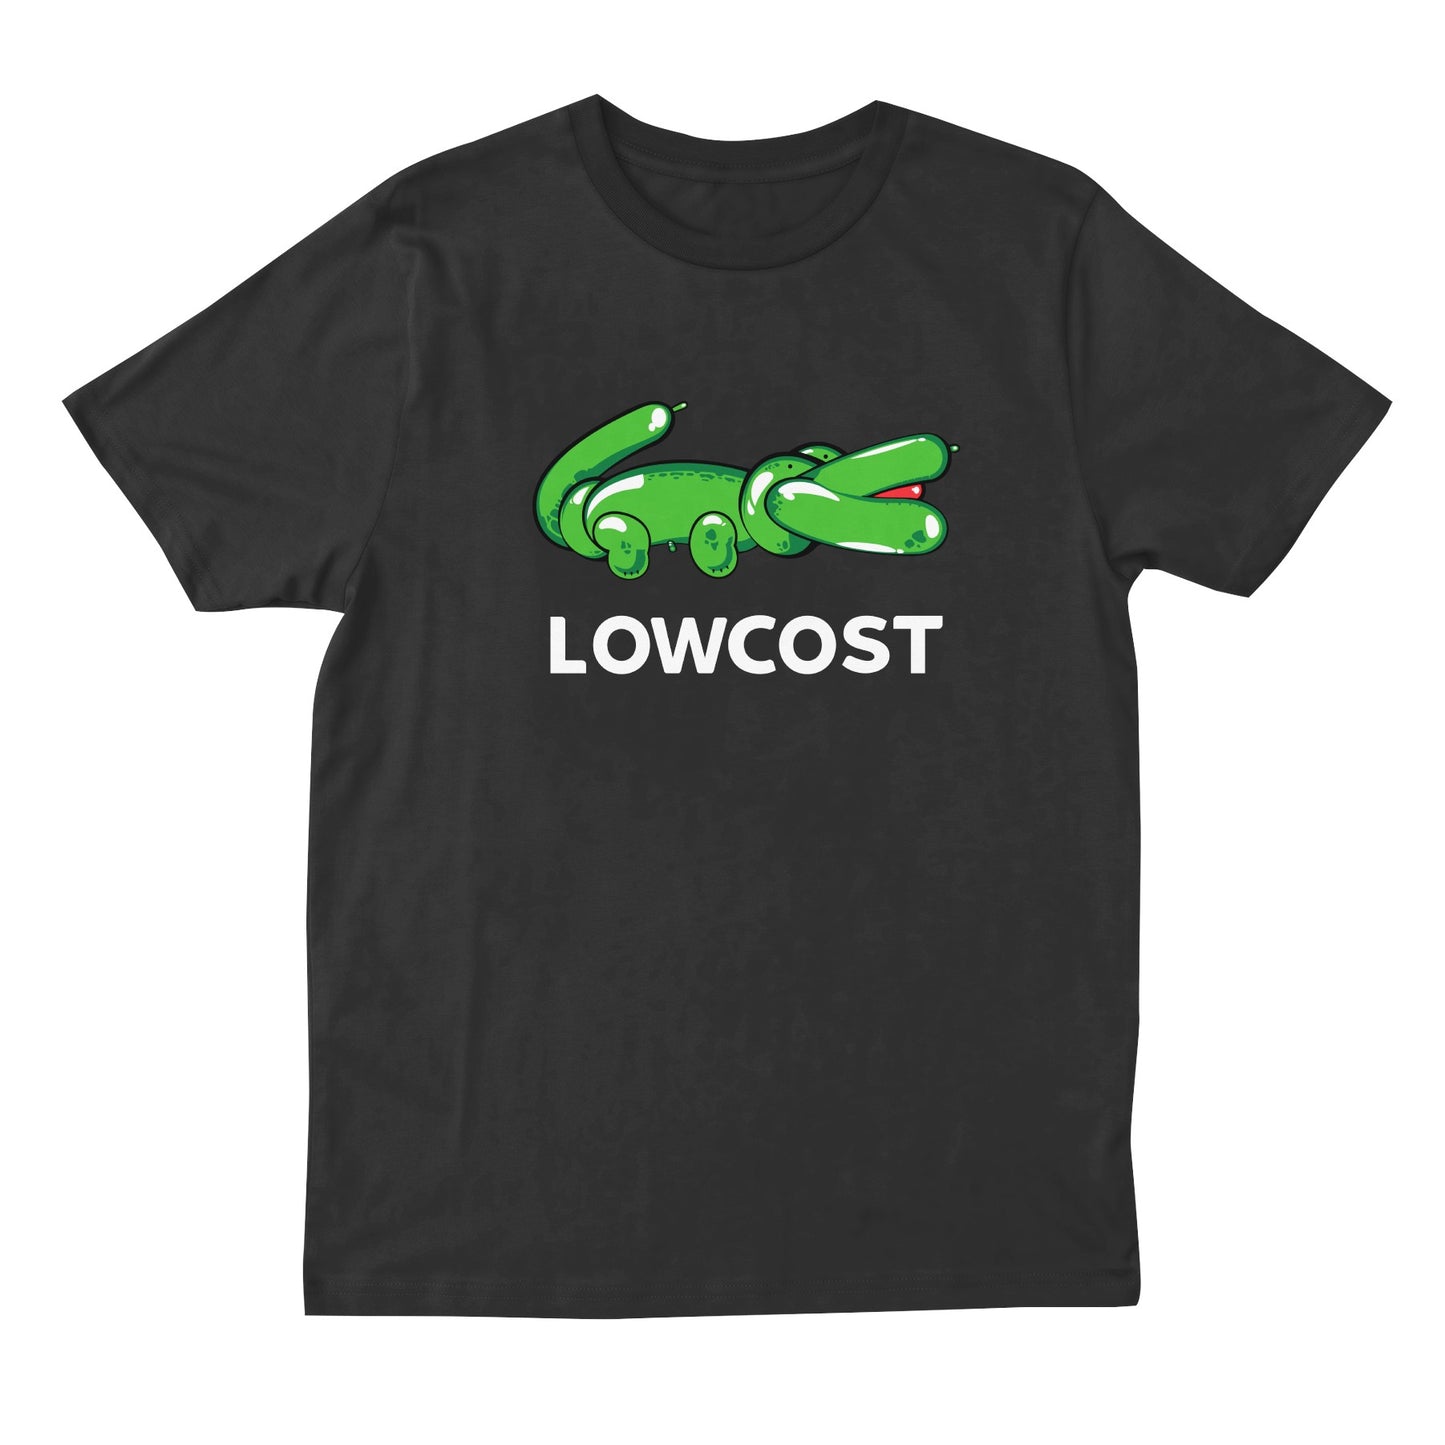 lowcost t-shirt black